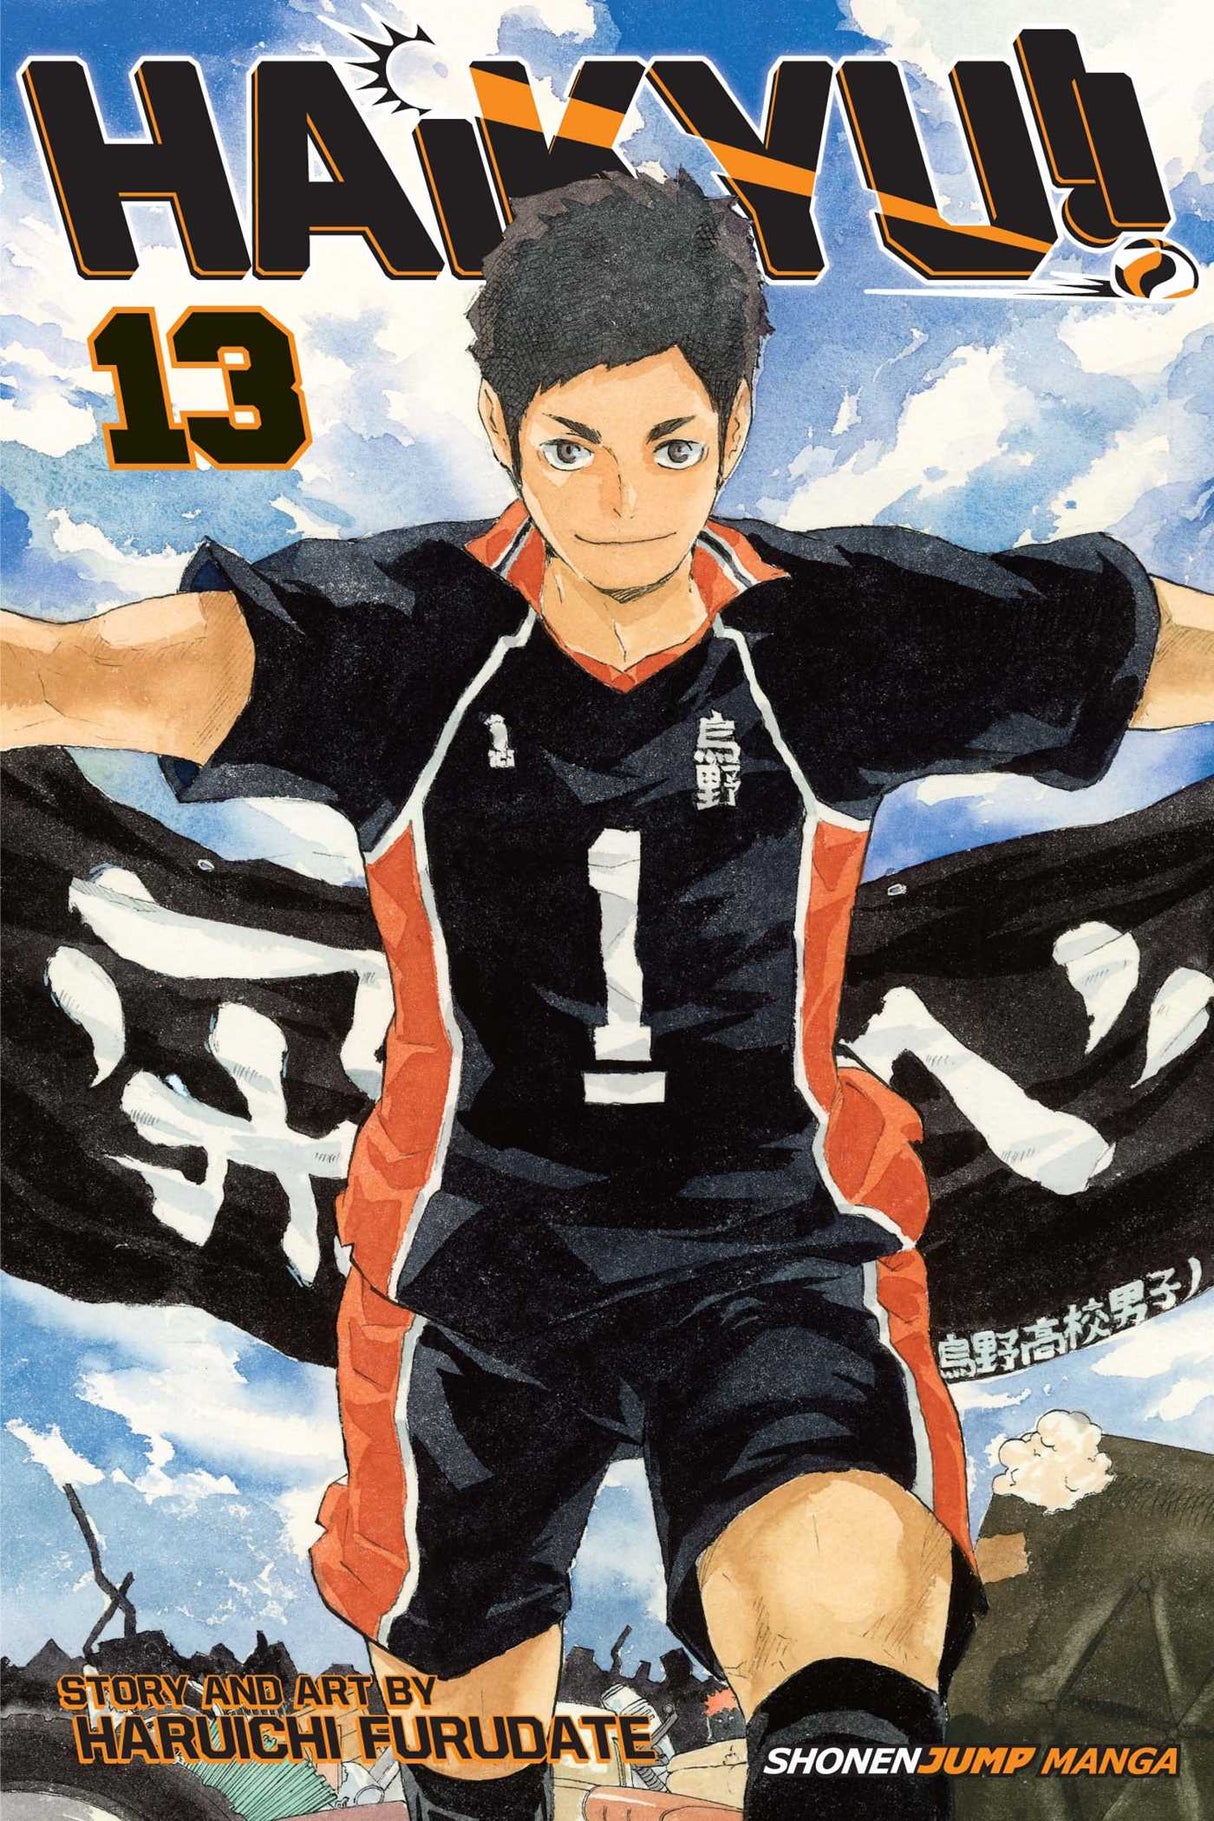 Cover image of the Manga Haikyu!!, Vol. 13